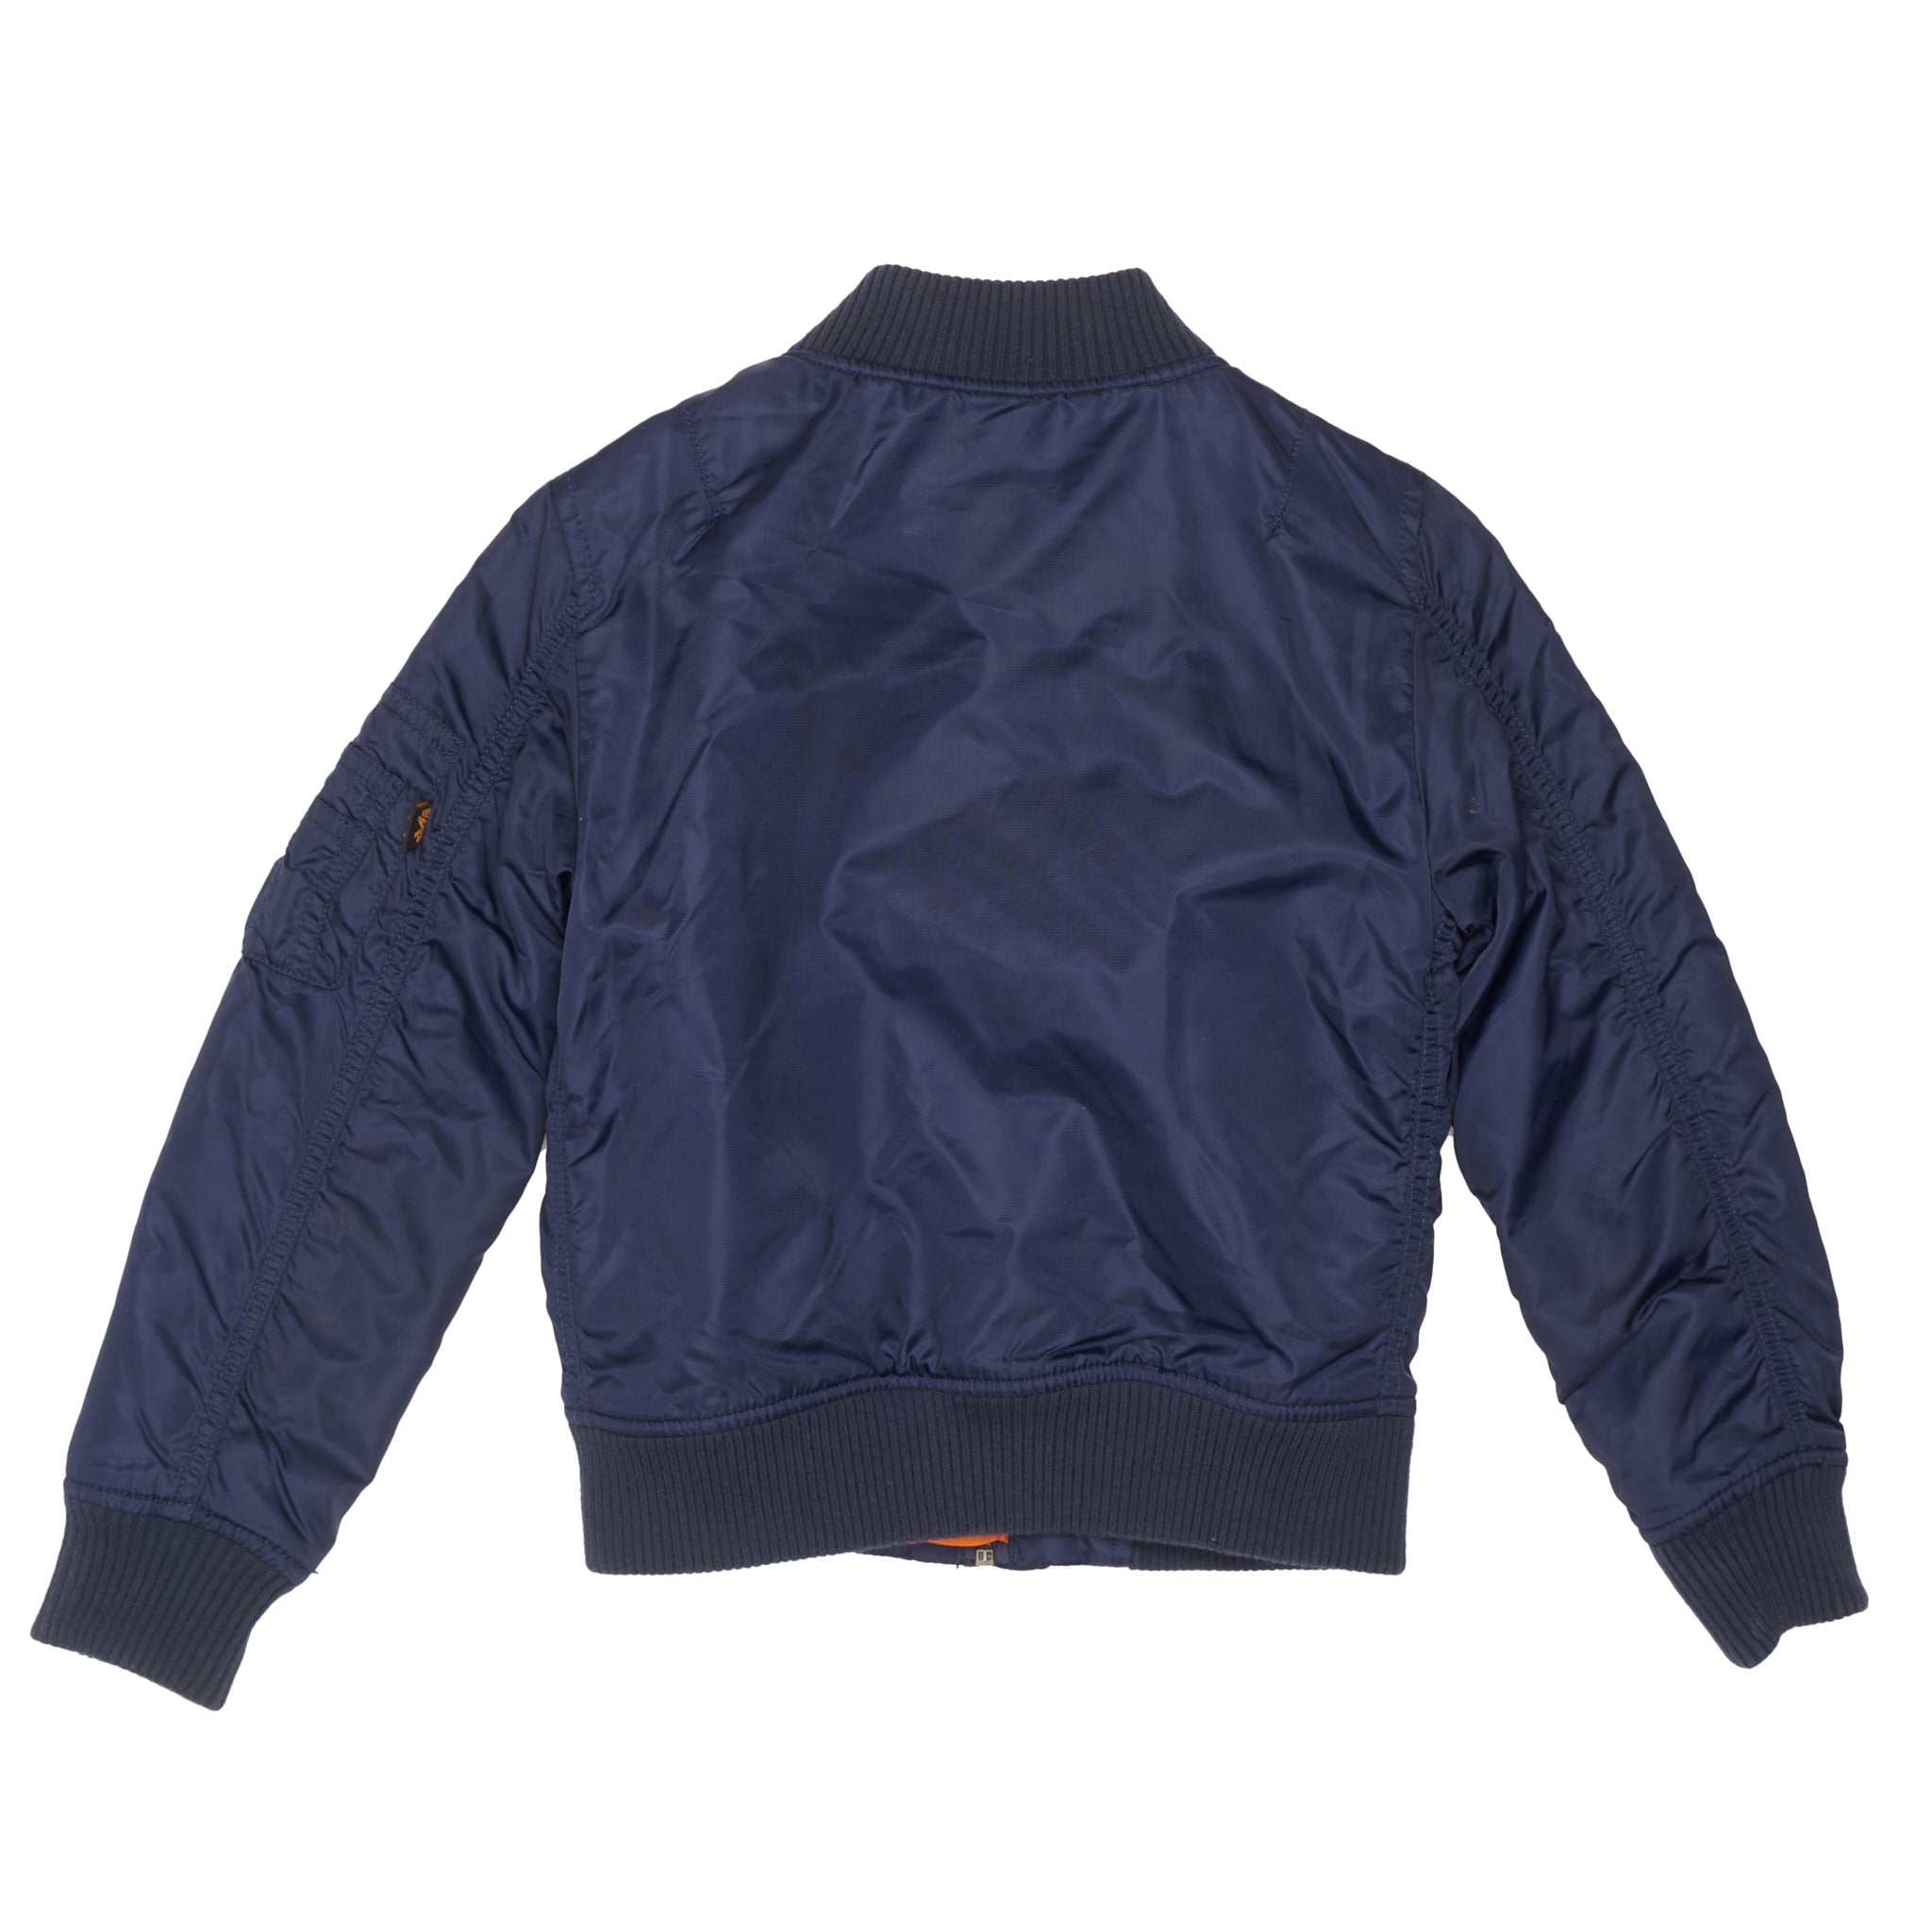 ALPHA INDUSTRIES Blue Nylon Children Boy's Bomber Flight Jacket Coat Size 5/6